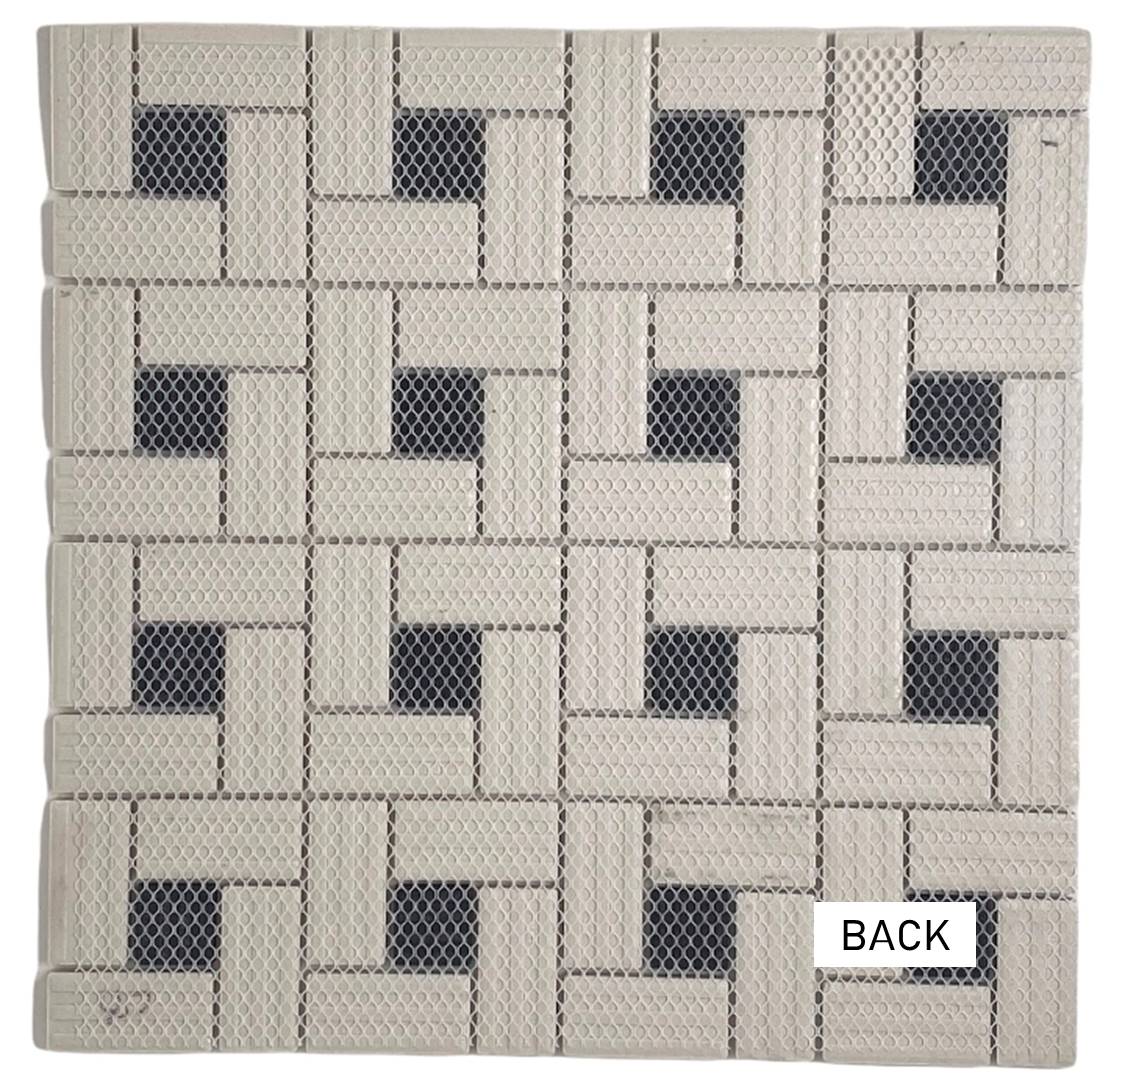 Tenedos Spiral Pattern Unglazed Porcelain Pinwheel Mosaic Floor Wall Tile Matte White with Light Black Dots for Bathroom Flooring